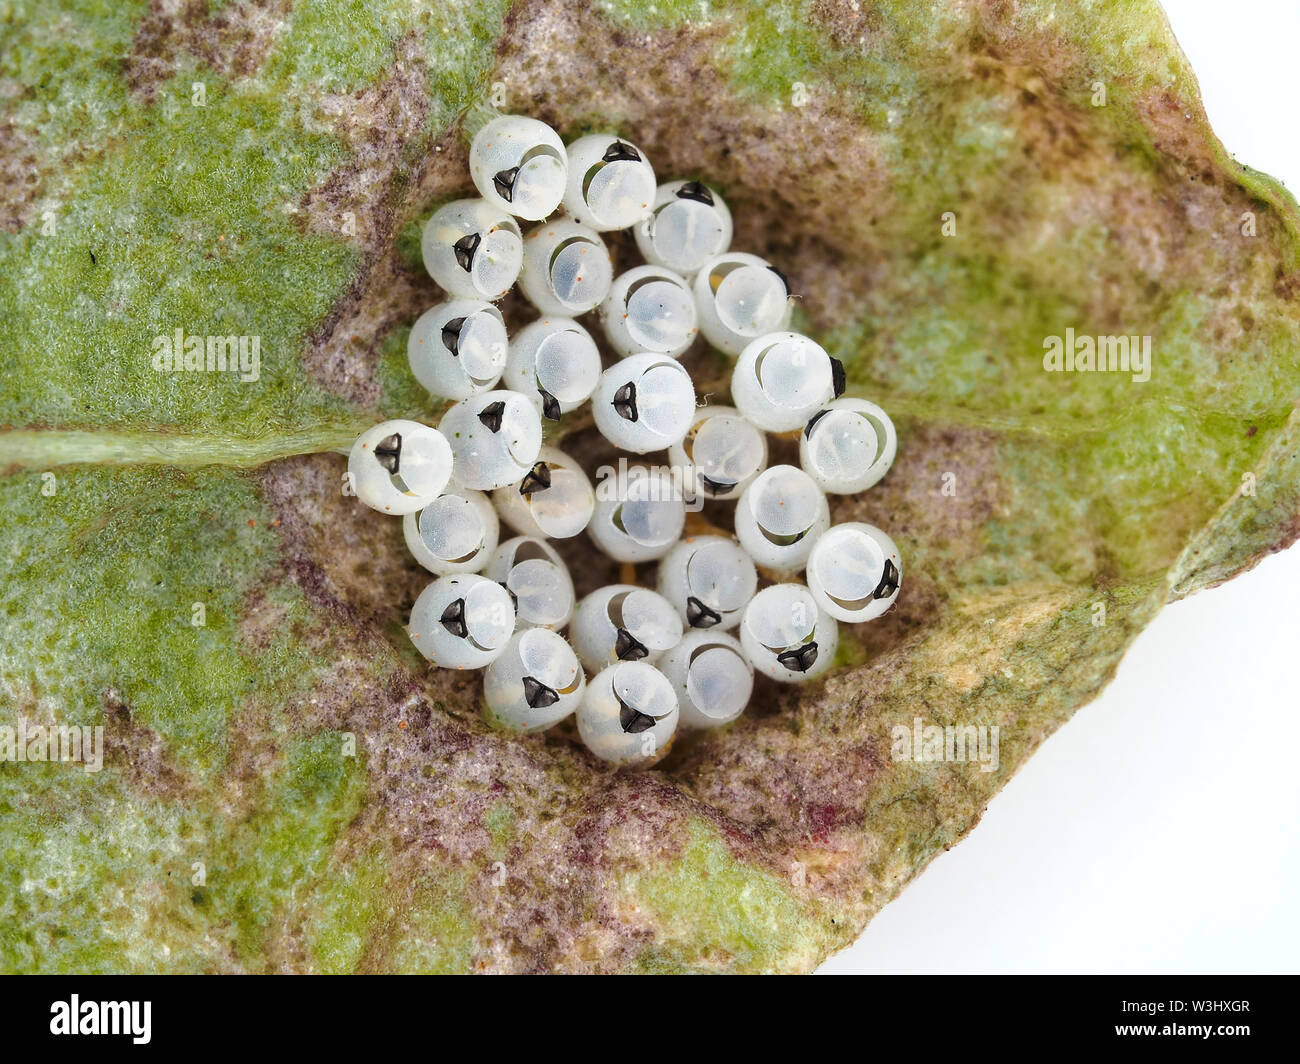 Uova cotte di bruno marmorated Stink bug (Halyomorfa halys) su una foglia di barbabietola - macrofotografia Foto Stock